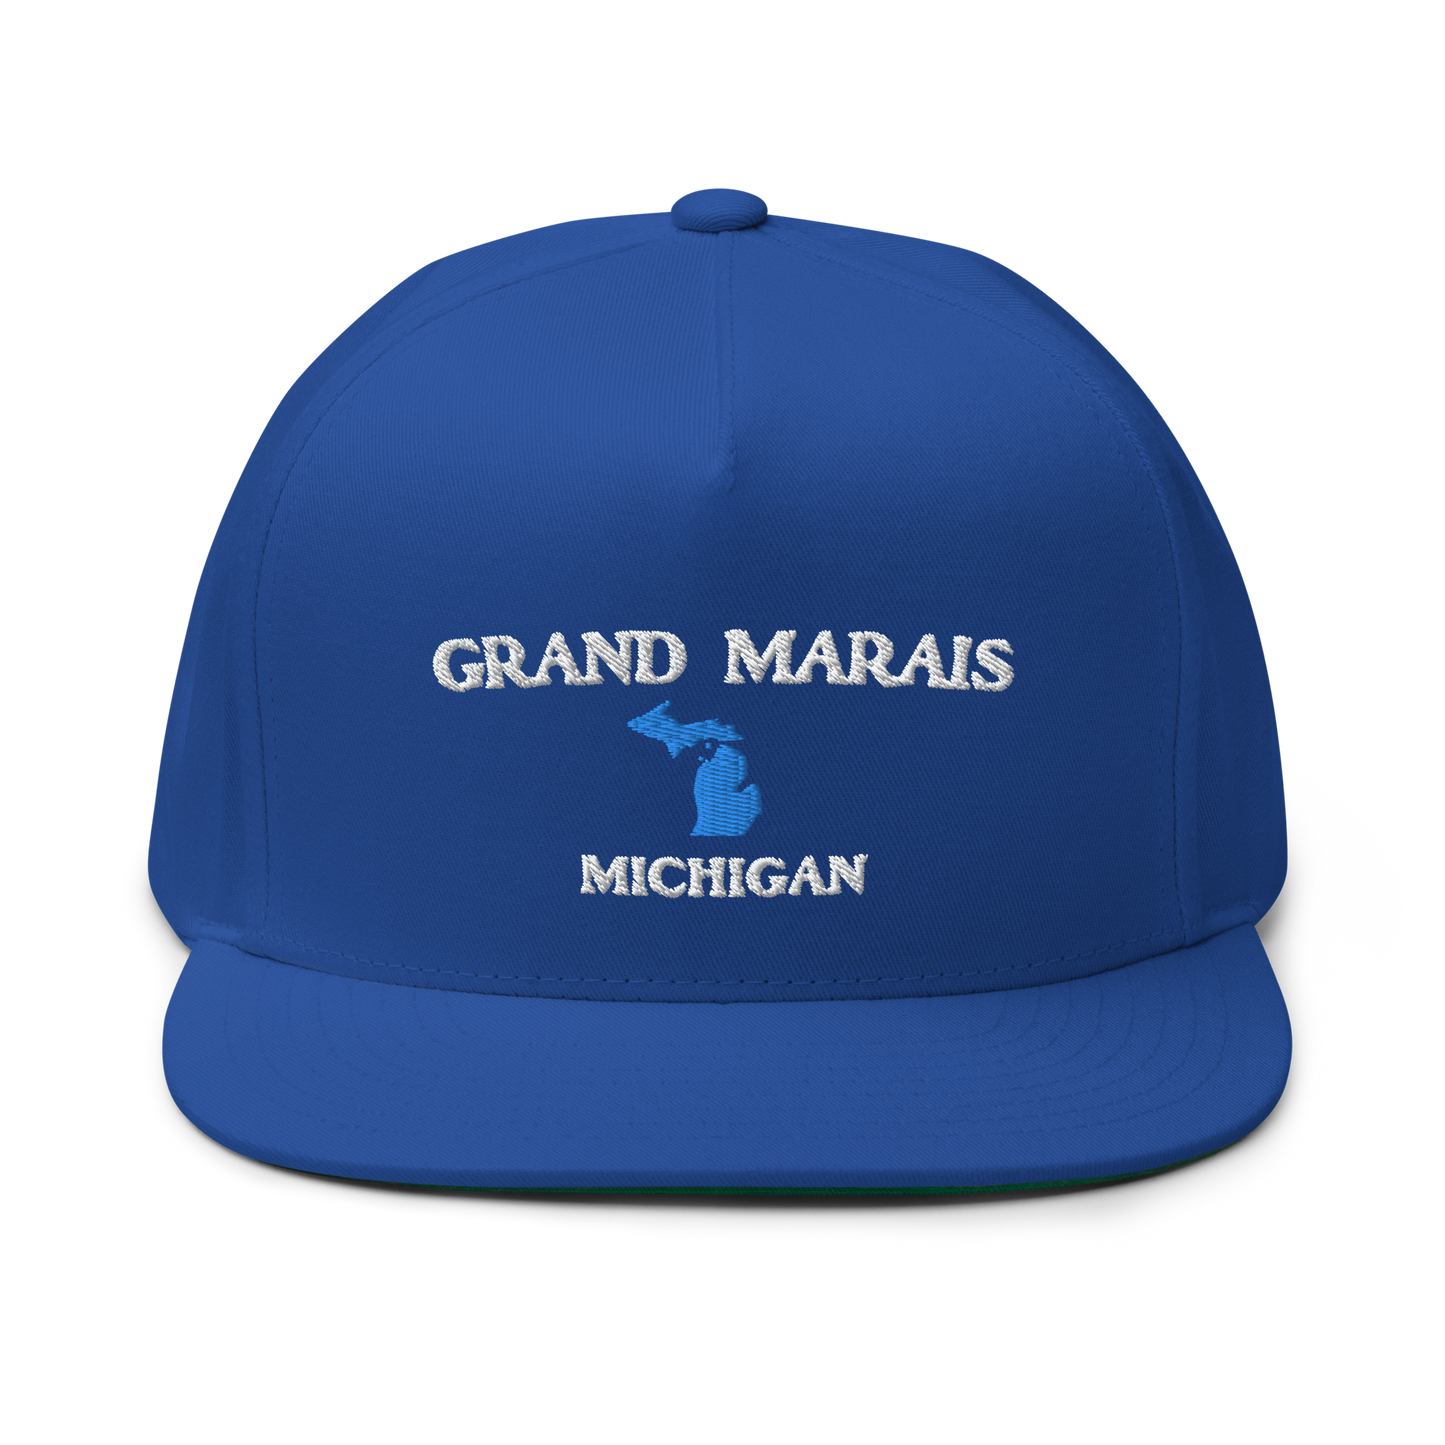 'Grand Marais Michigan' Flat Bill Snapback (w/ Michigan Outline)